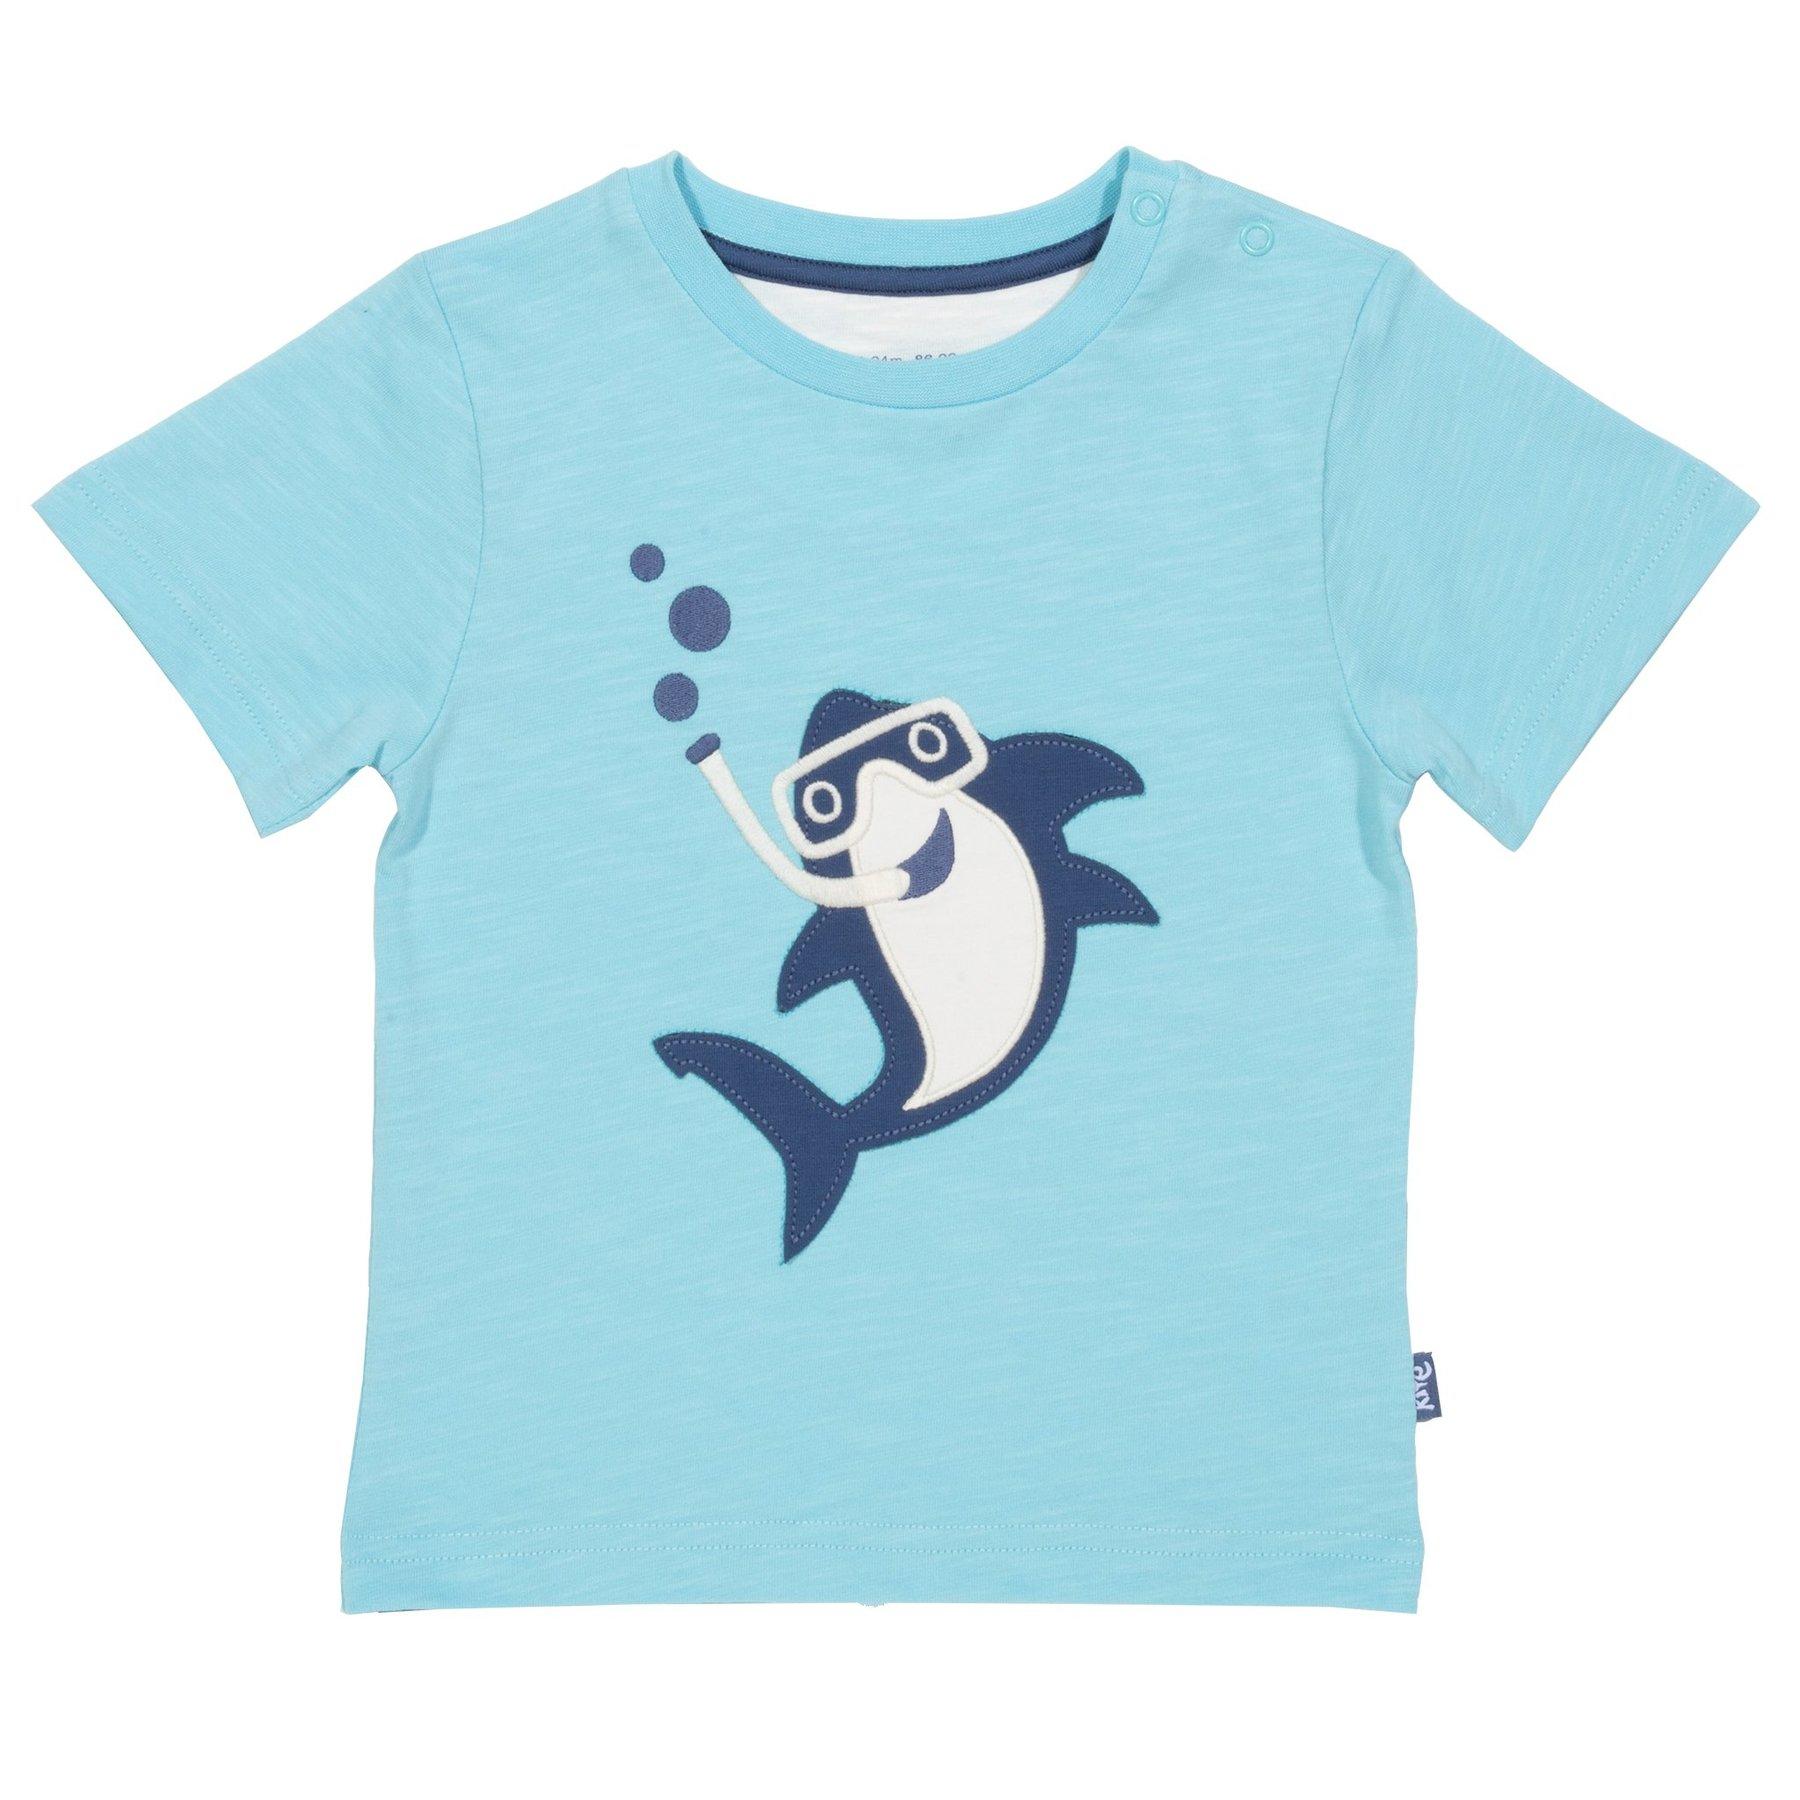 Kite Clothing Snorkel Shark T-Shirt front